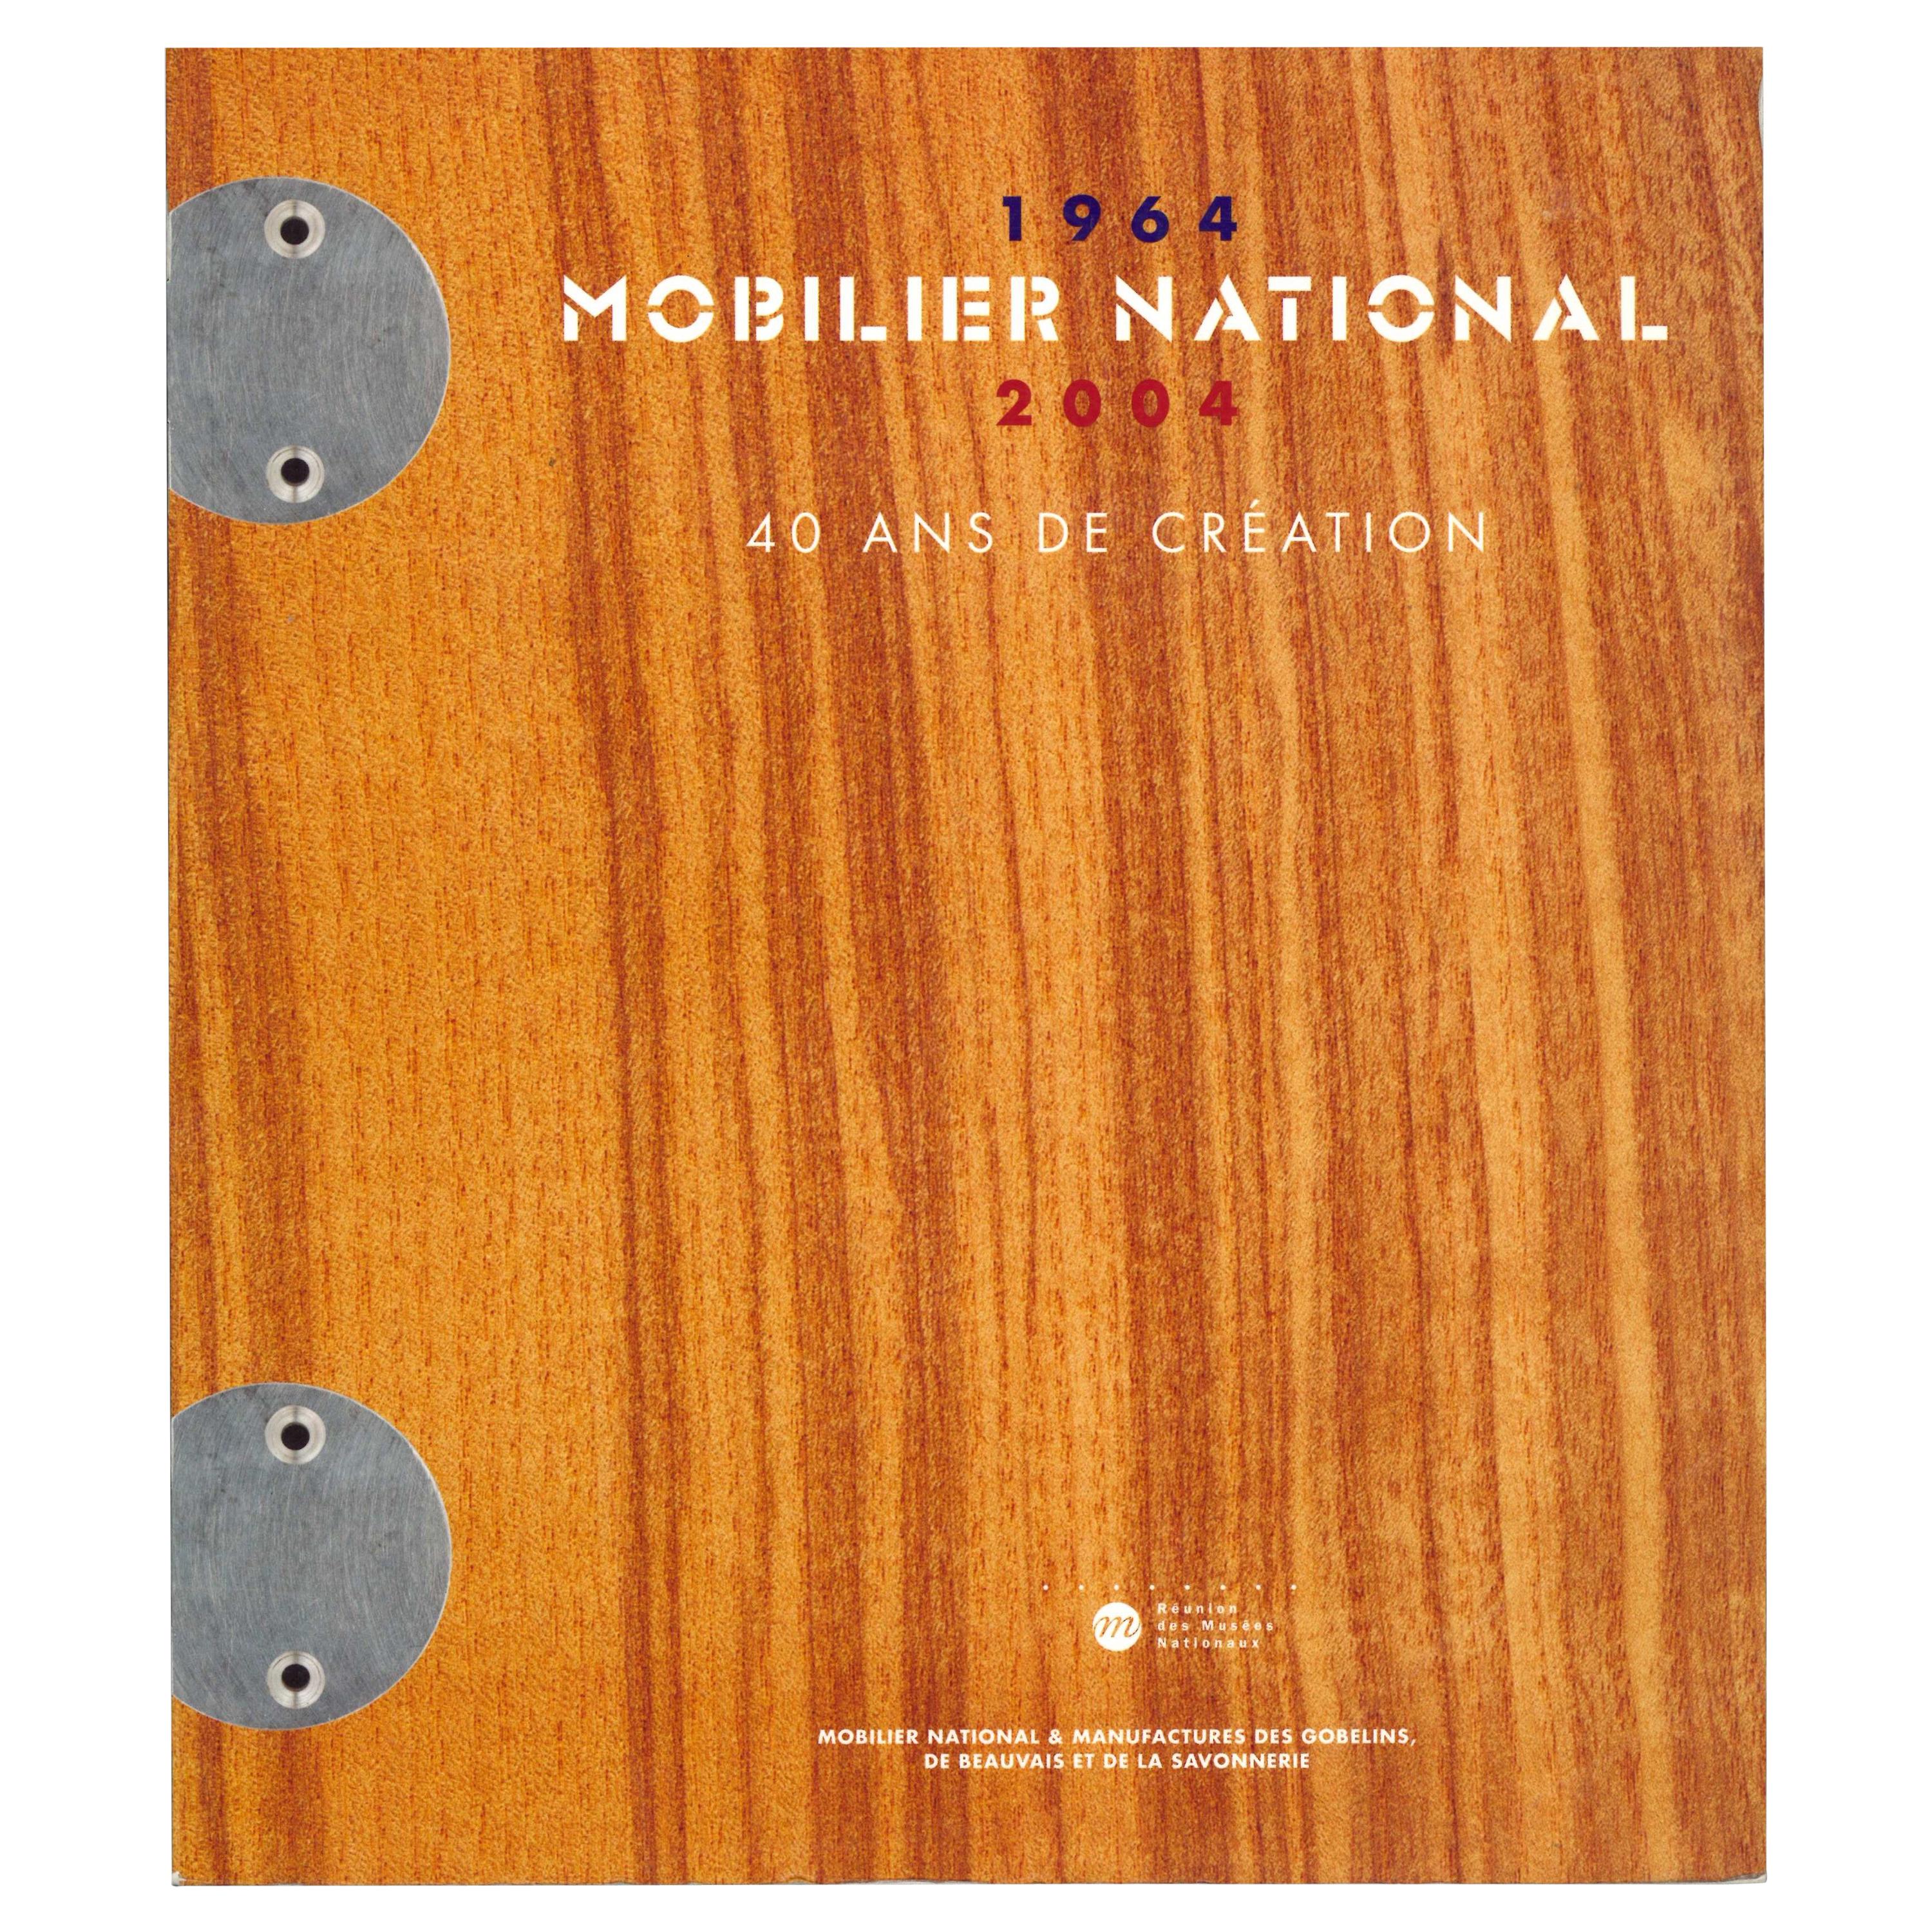 Mobilier National 1964-2004: 40 Ans De Creation (Book)